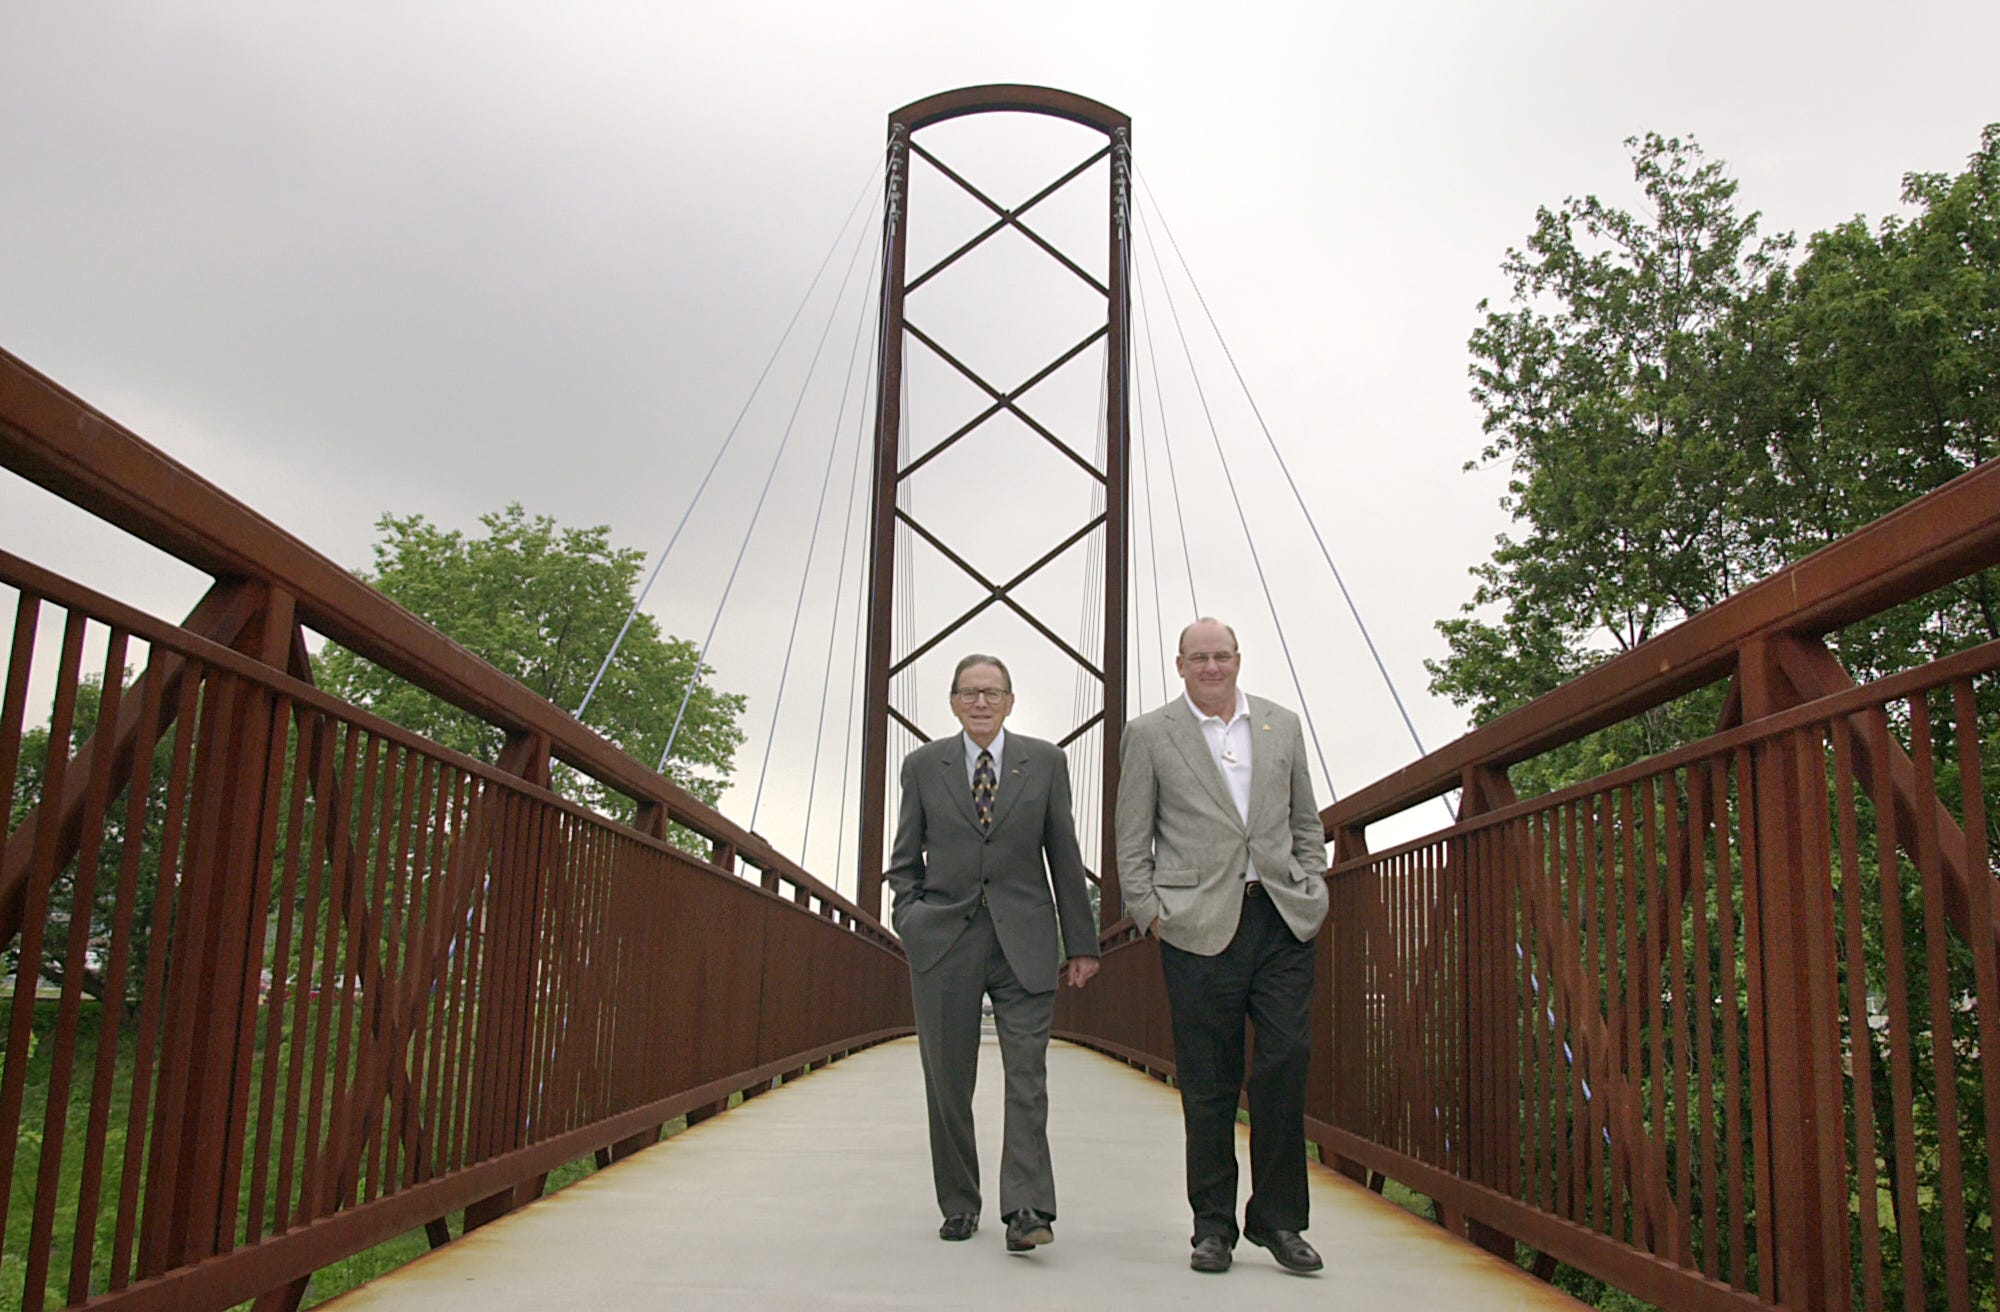 Two men stand on a walking bridge.